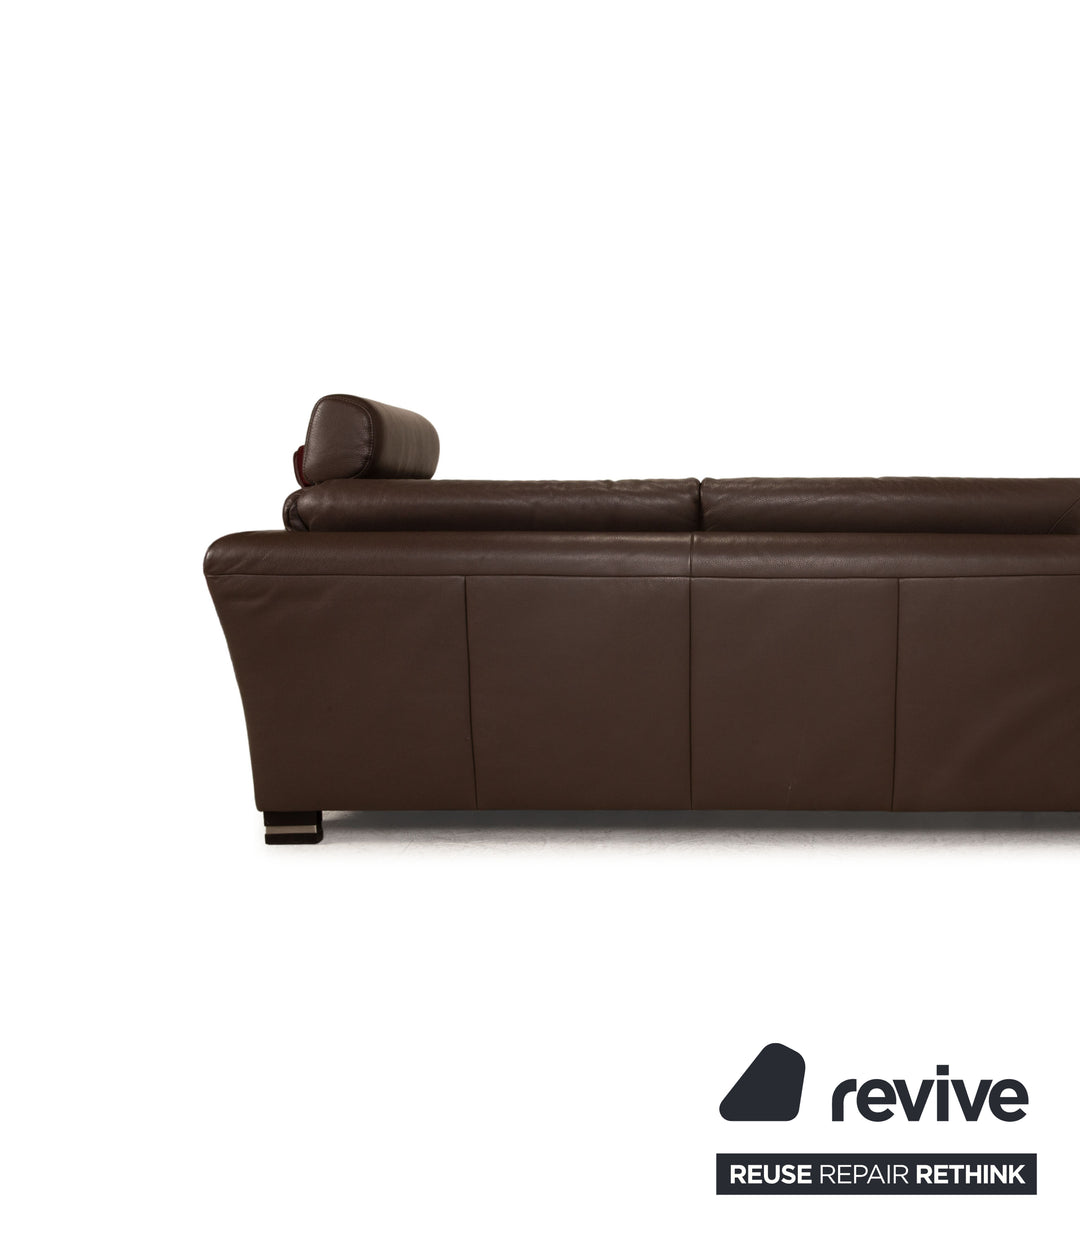 Ewald Schillig Bentley leather corner sofa brown dark brown sofa couch recamier left